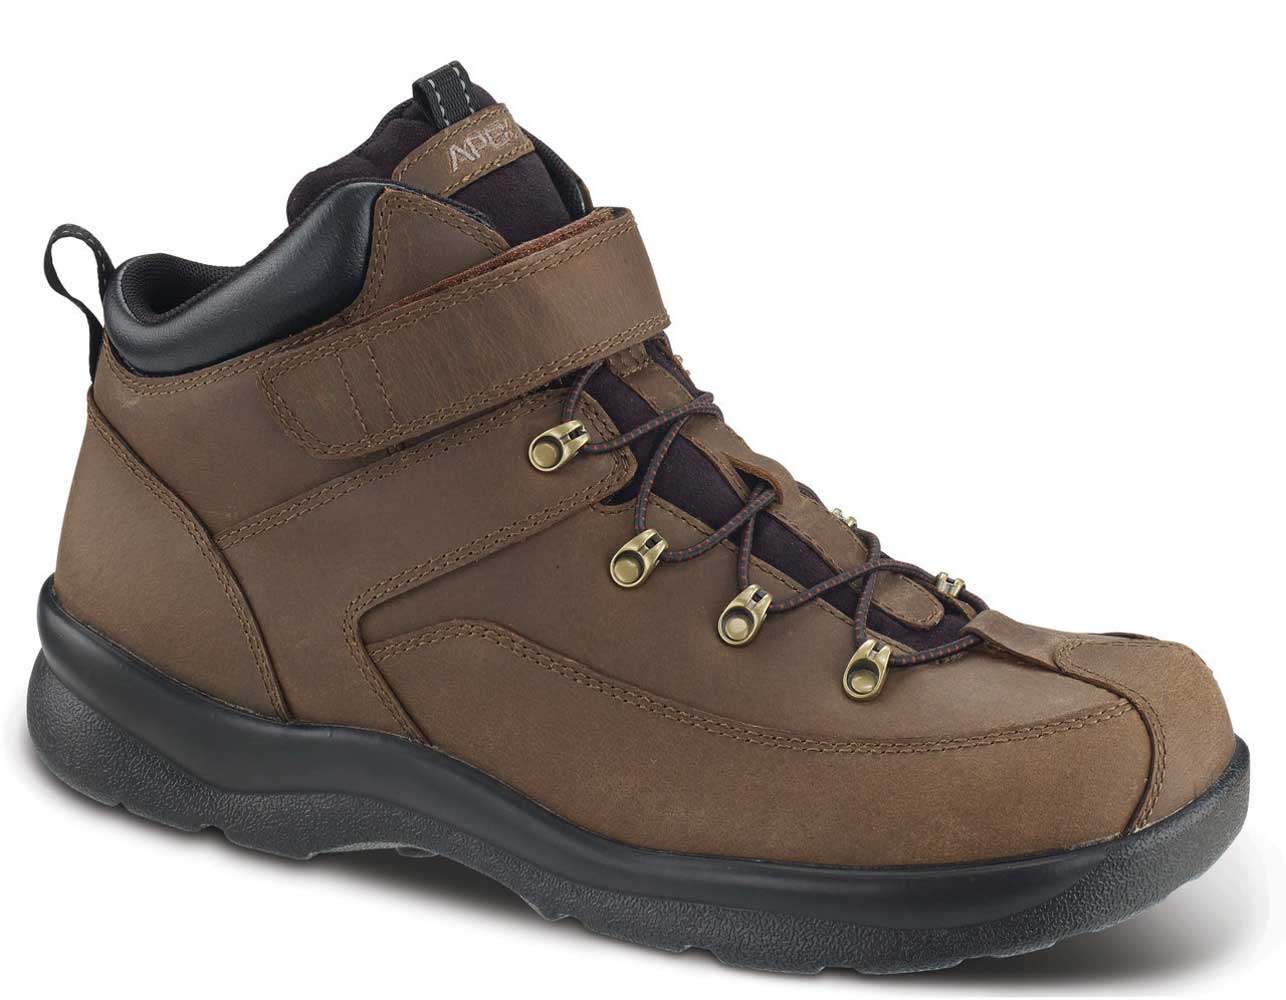 Apex Shoes A4100M Ariya Men's 2 Hiking Boot -  Orthopedic Diabetic Shoe - Extra Wide - Extra Depth